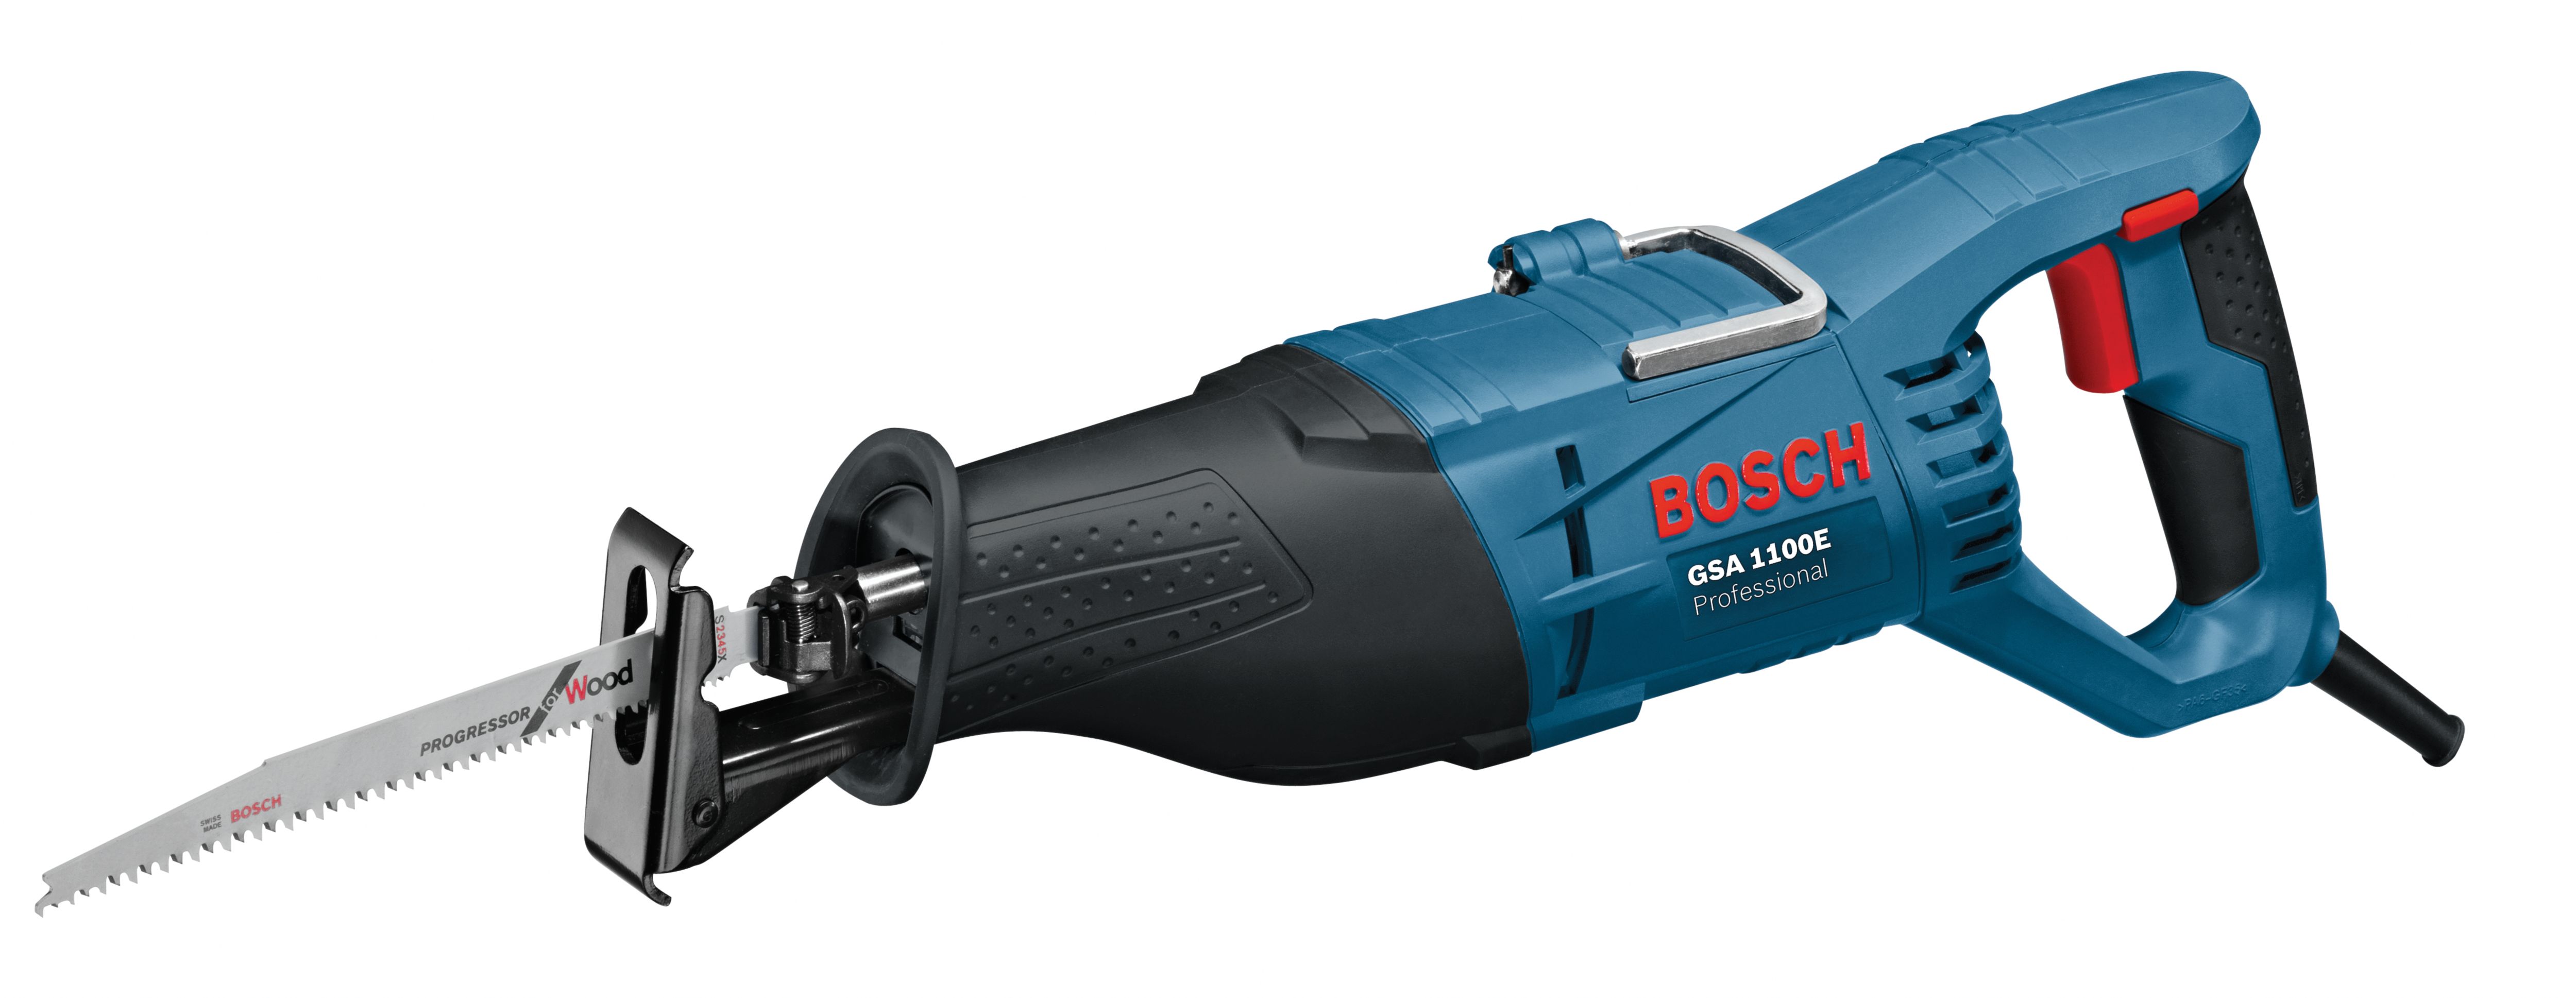 Image of Bosch Professional GSA 1100 E Corded Reciprocating Saw 240V - 1100W